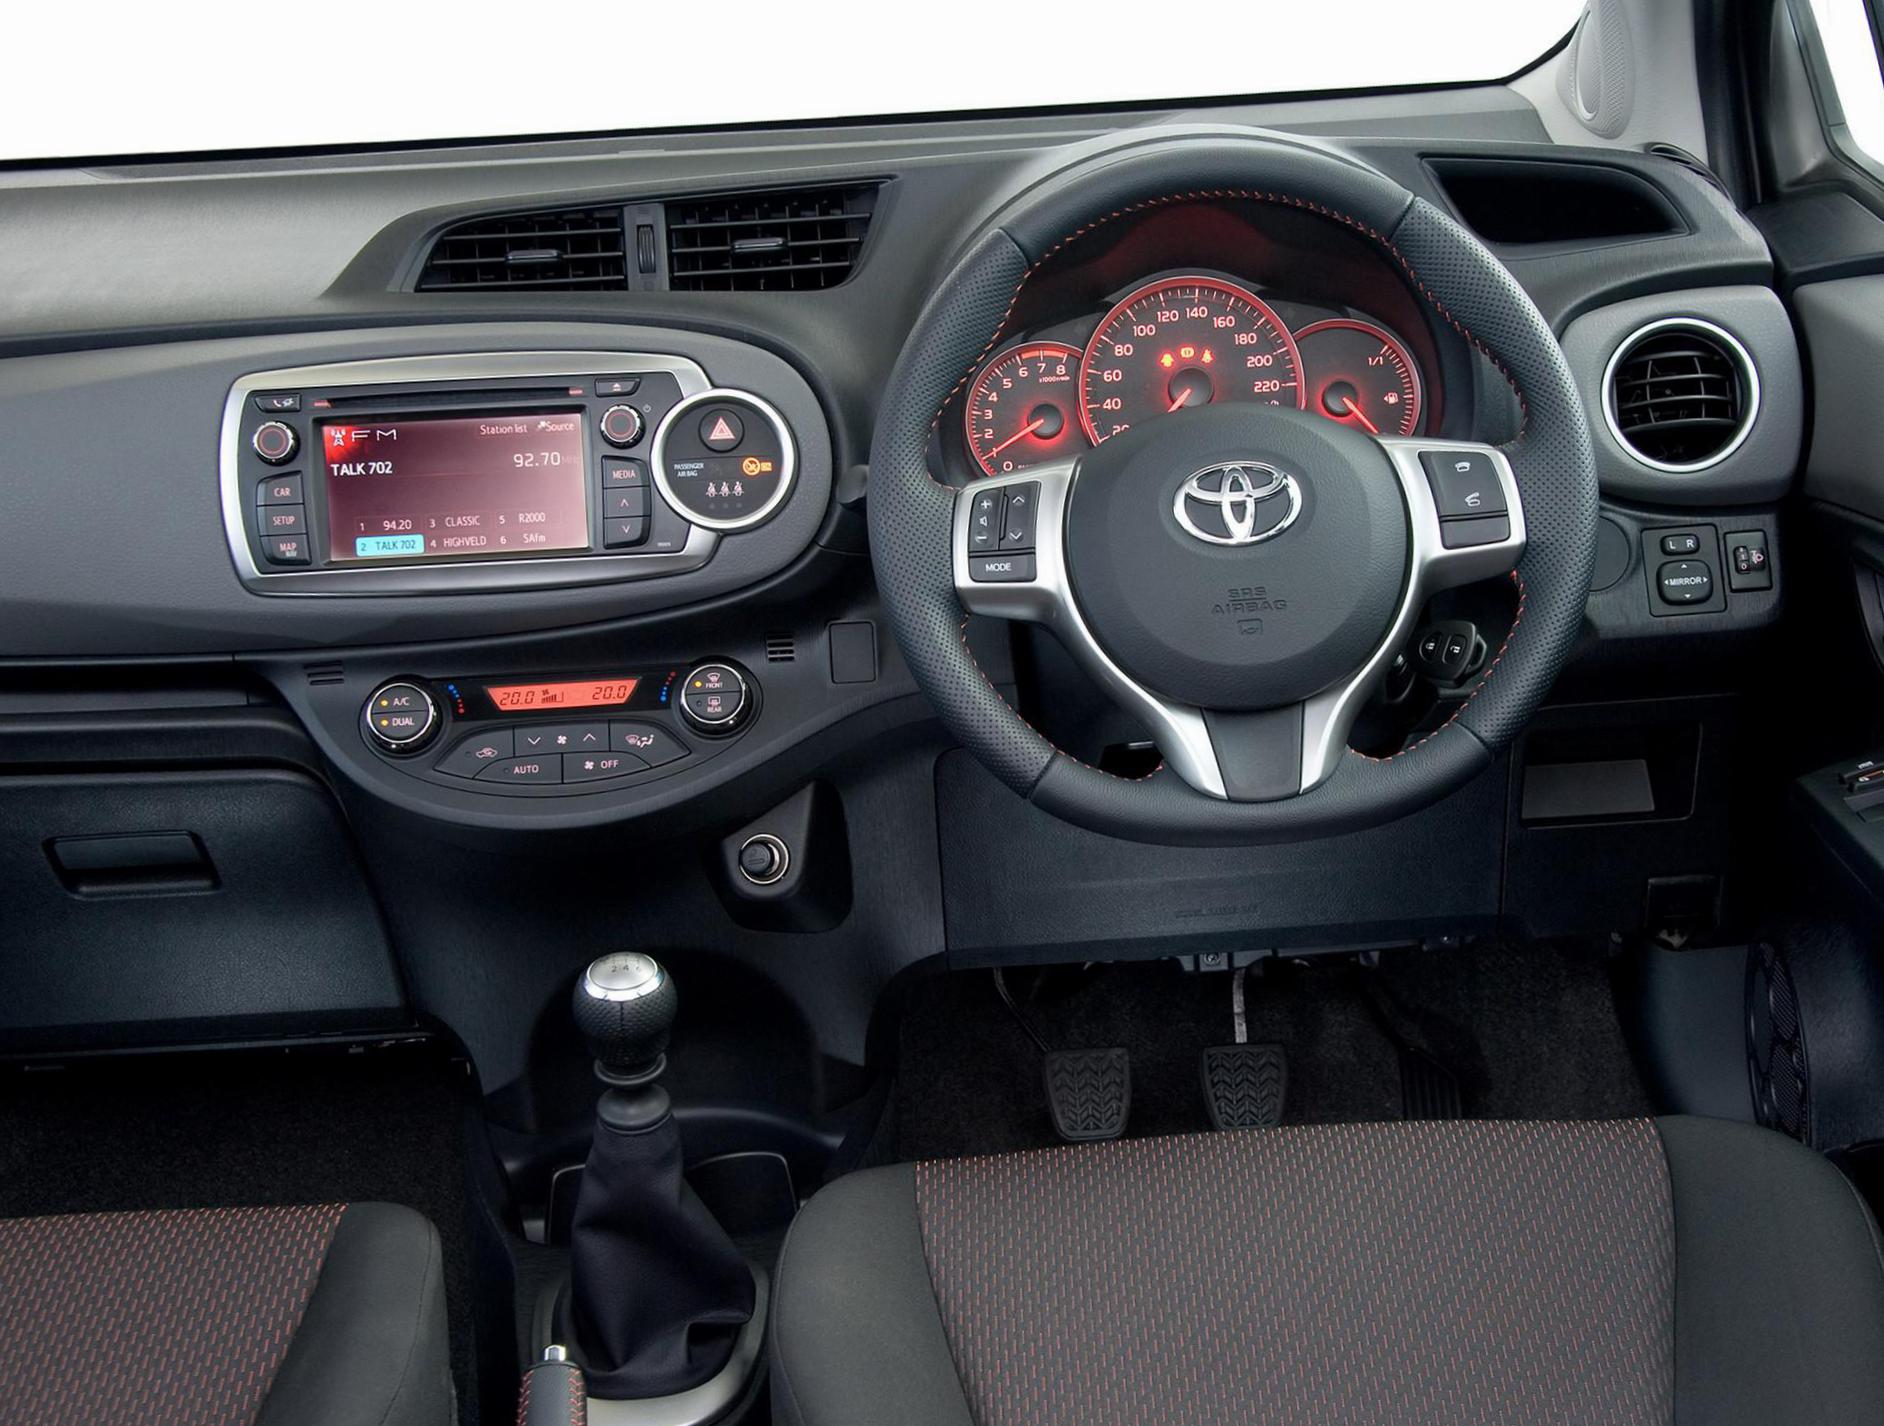 Toyota Yaris 3 doors price 2005